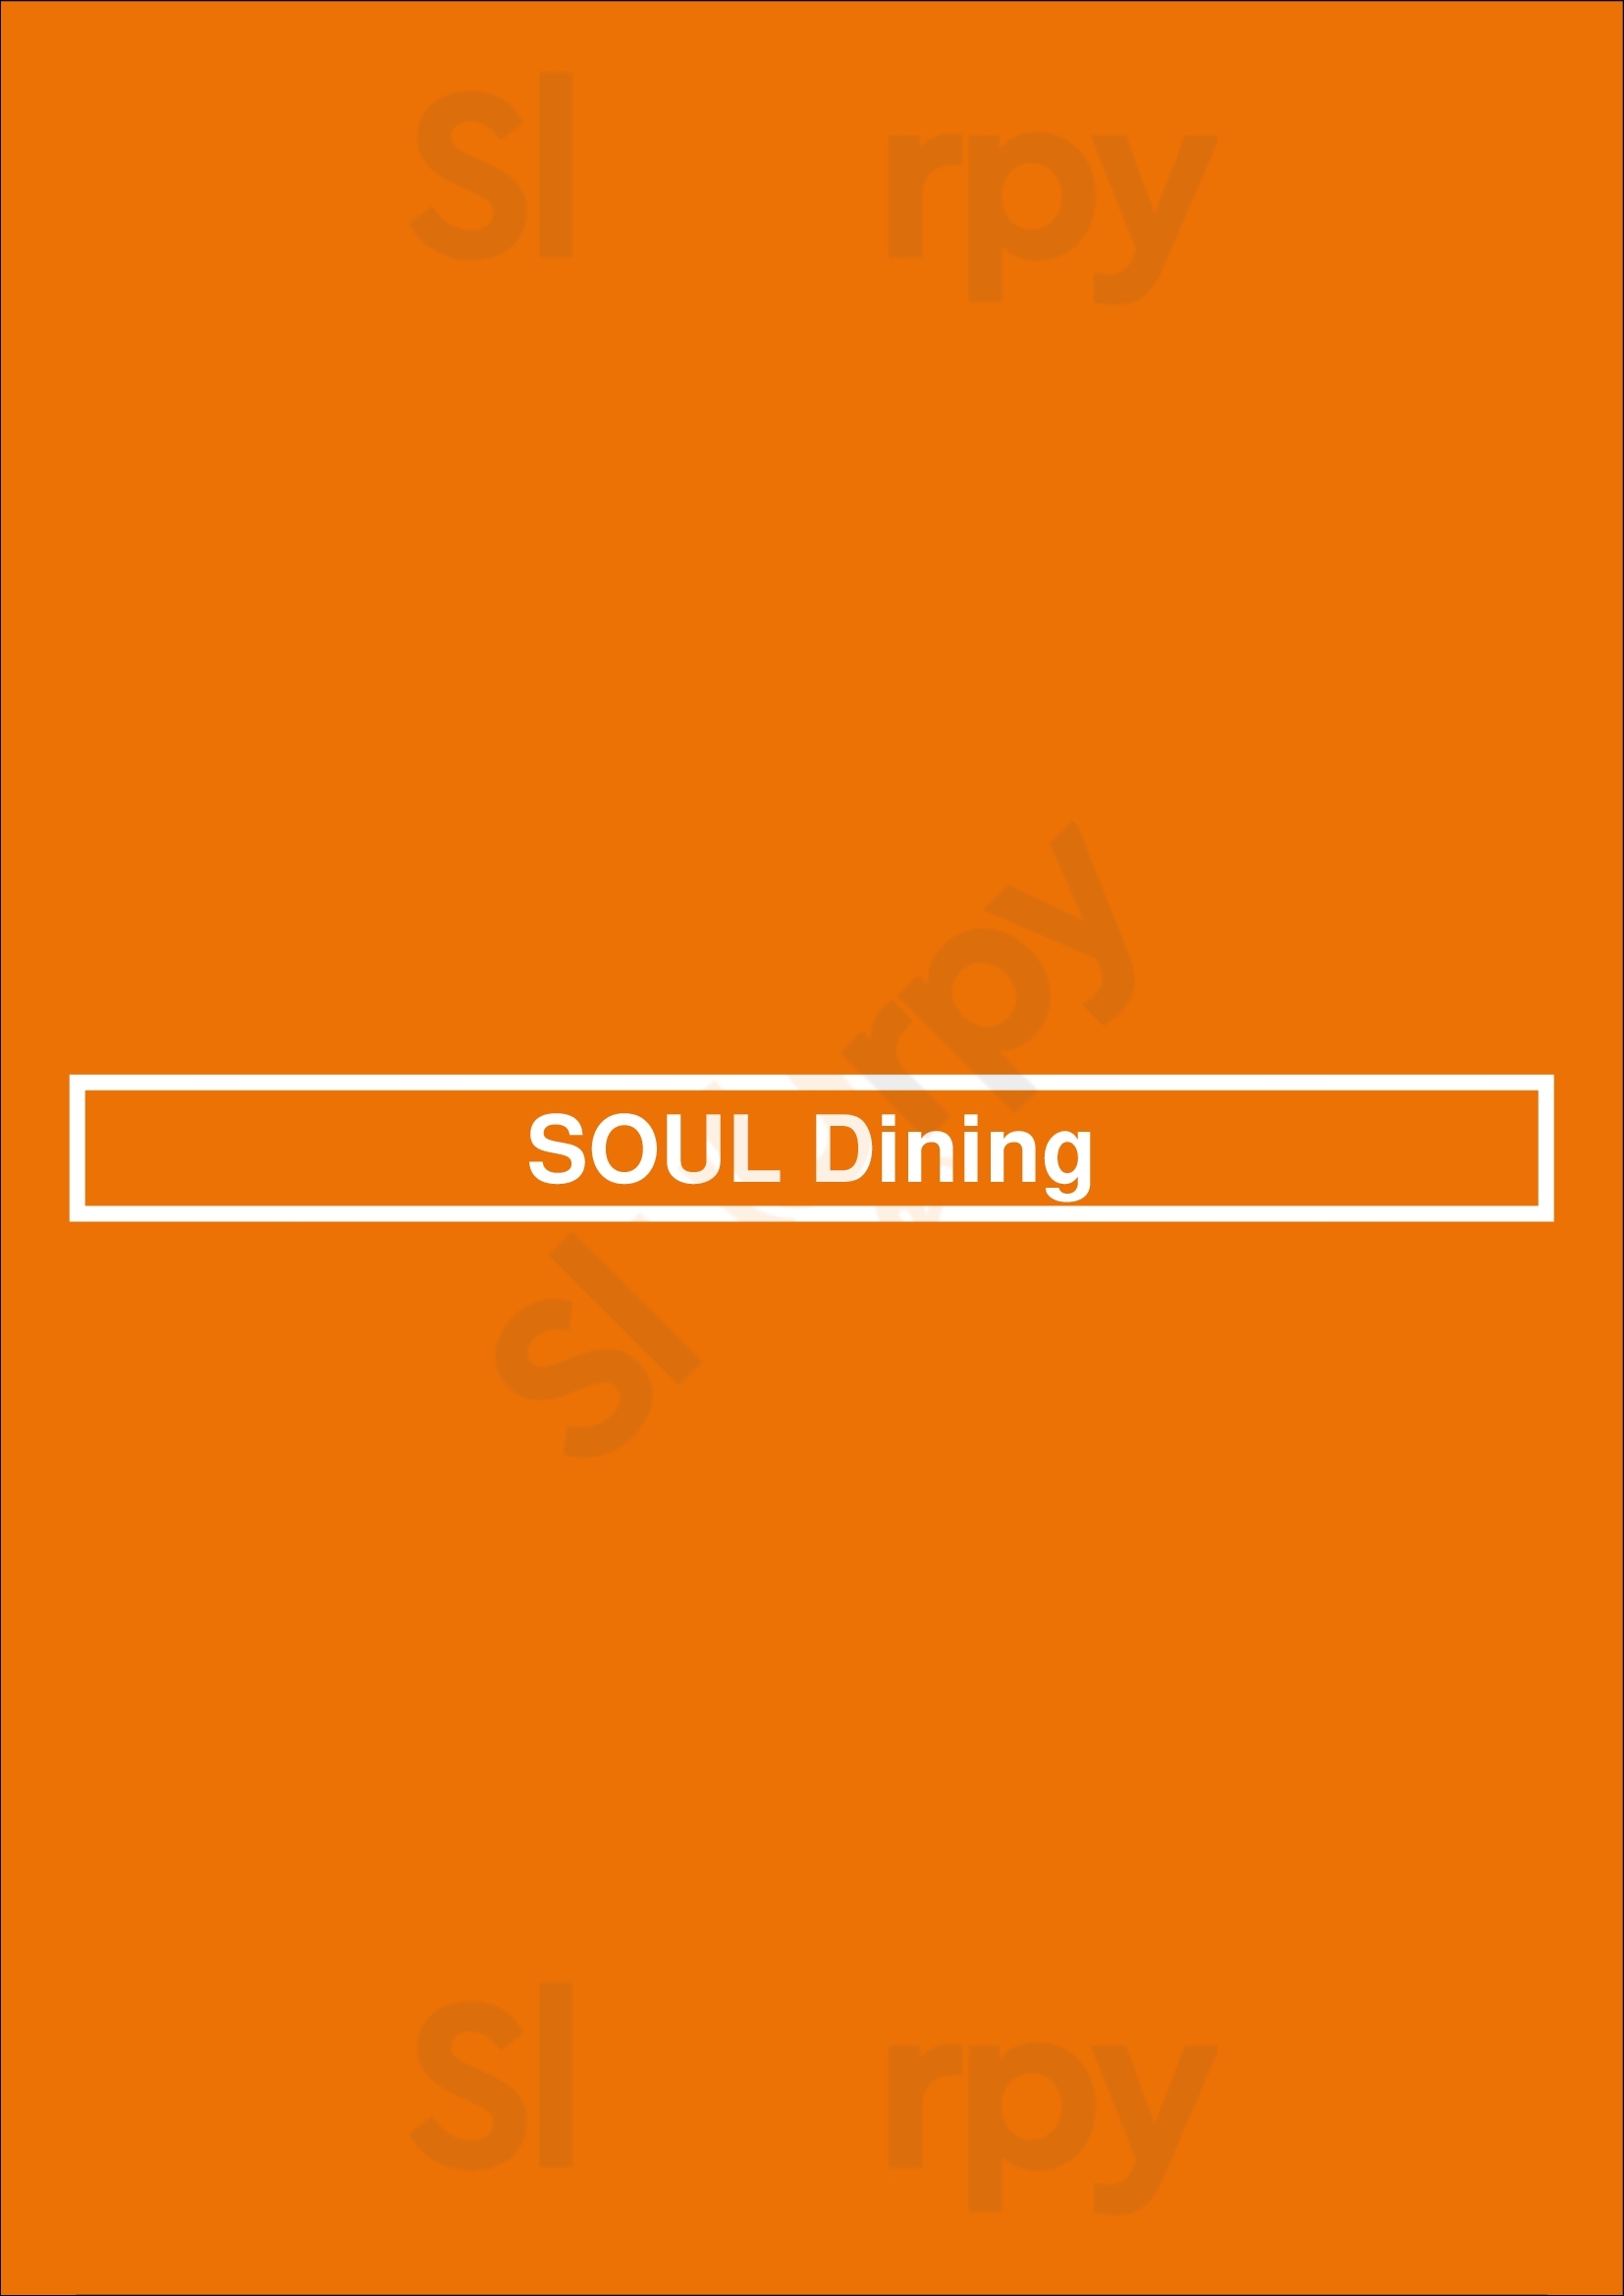 Soul Dining Sydney Menu - 1